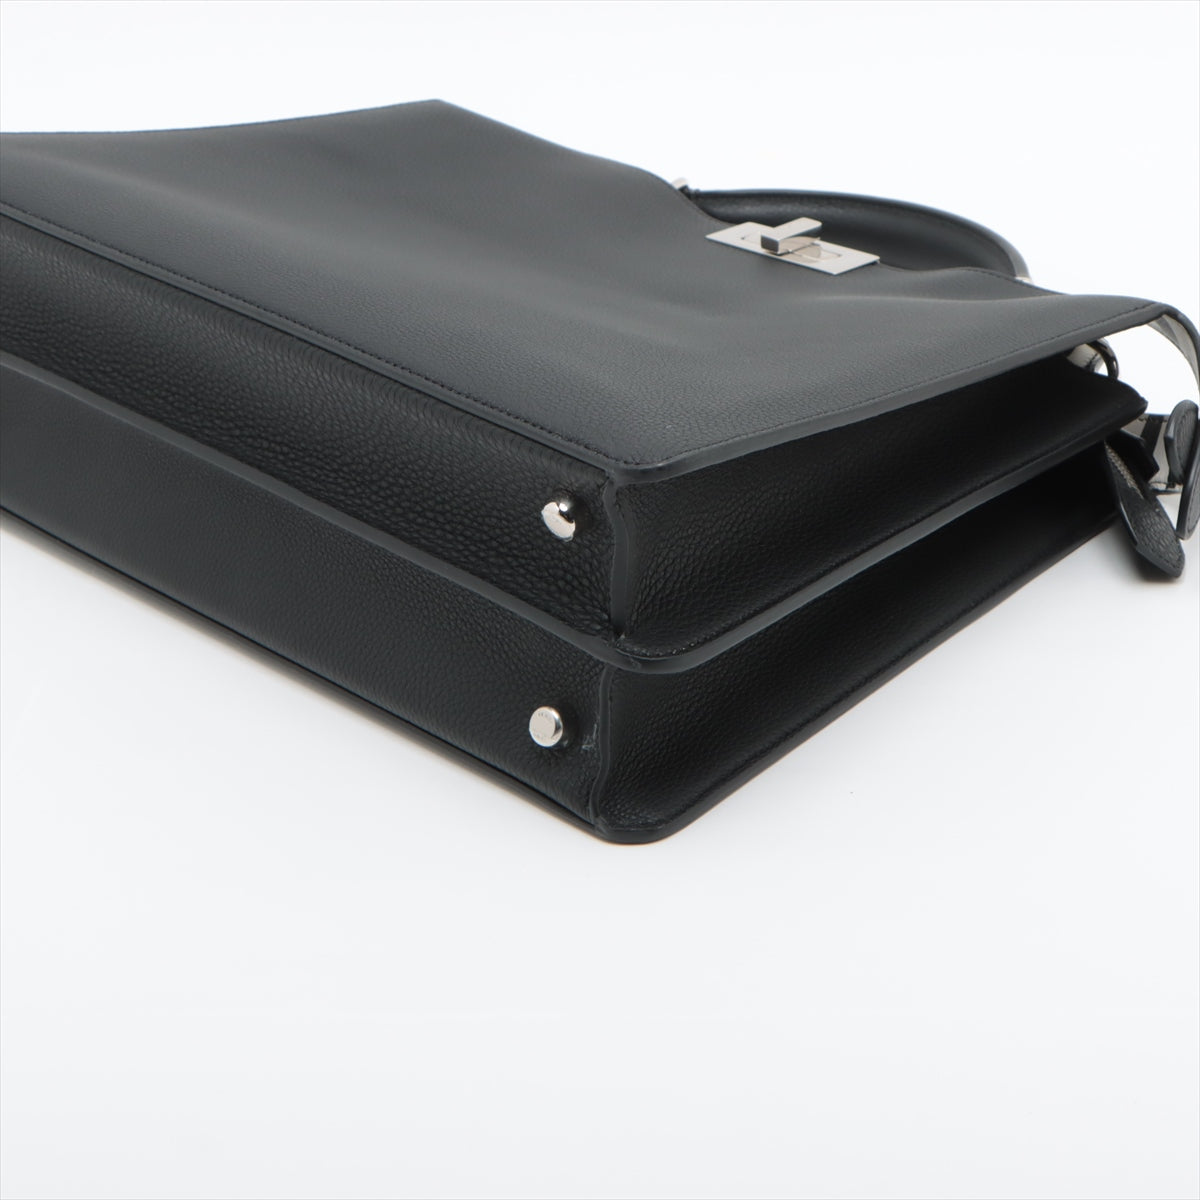 Fendi x Marc Jacobs Peek-a-boo ICU Co., Ltd. Medium Leather 2 Way Handbag Black × White 7VA529